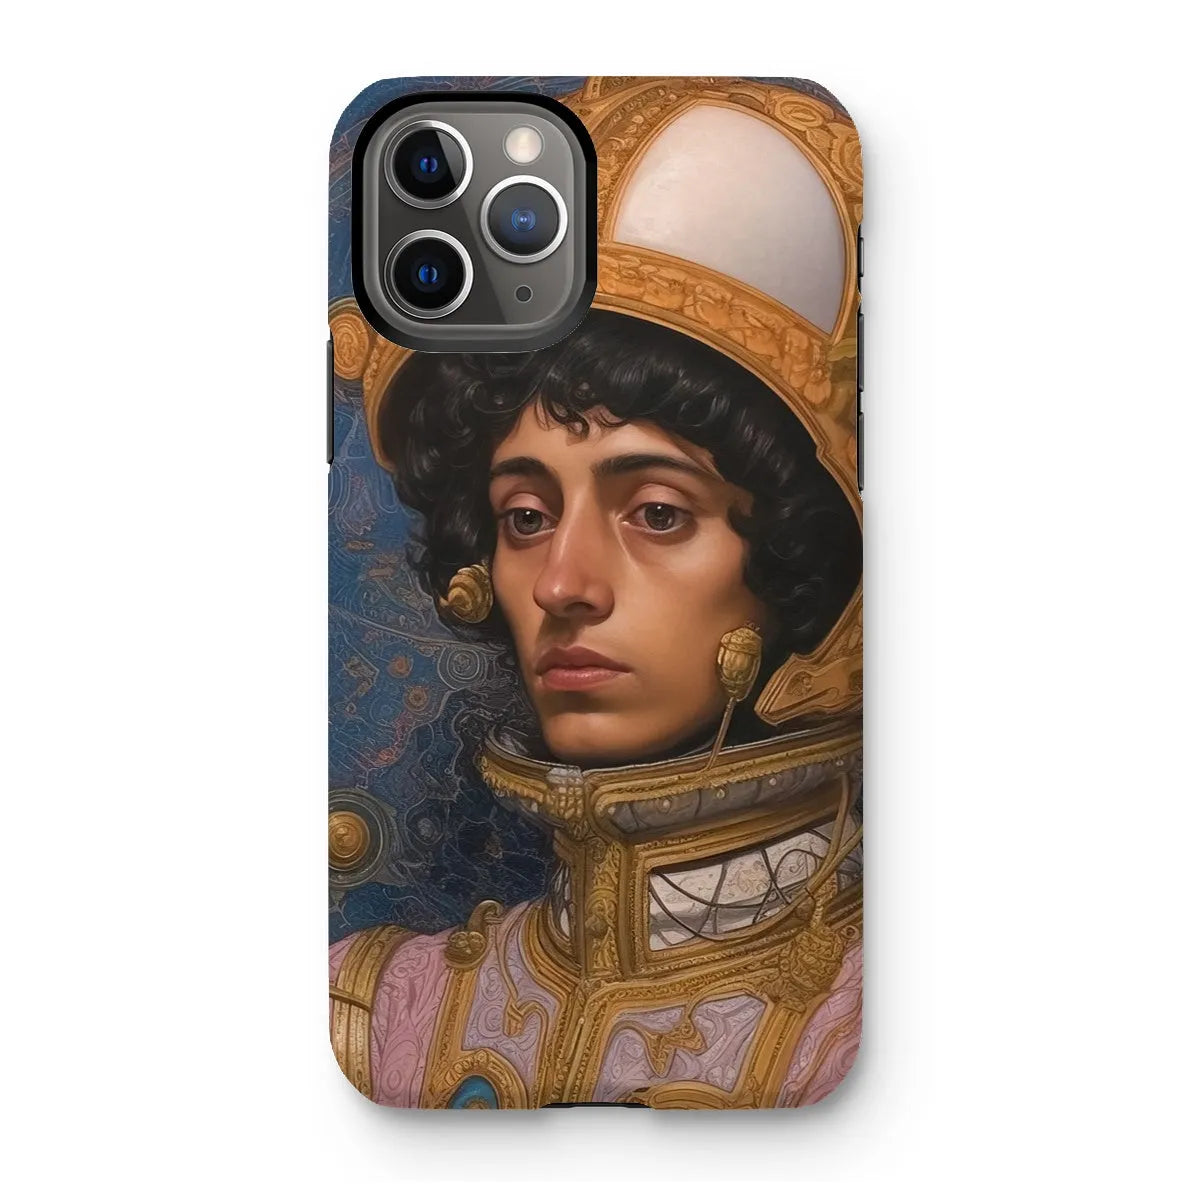 Samir The Gay Astronaut - Lgbtq Art Phone Case - Iphone 11 Pro / Matte - Mobile Phone Cases - Aesthetic Art